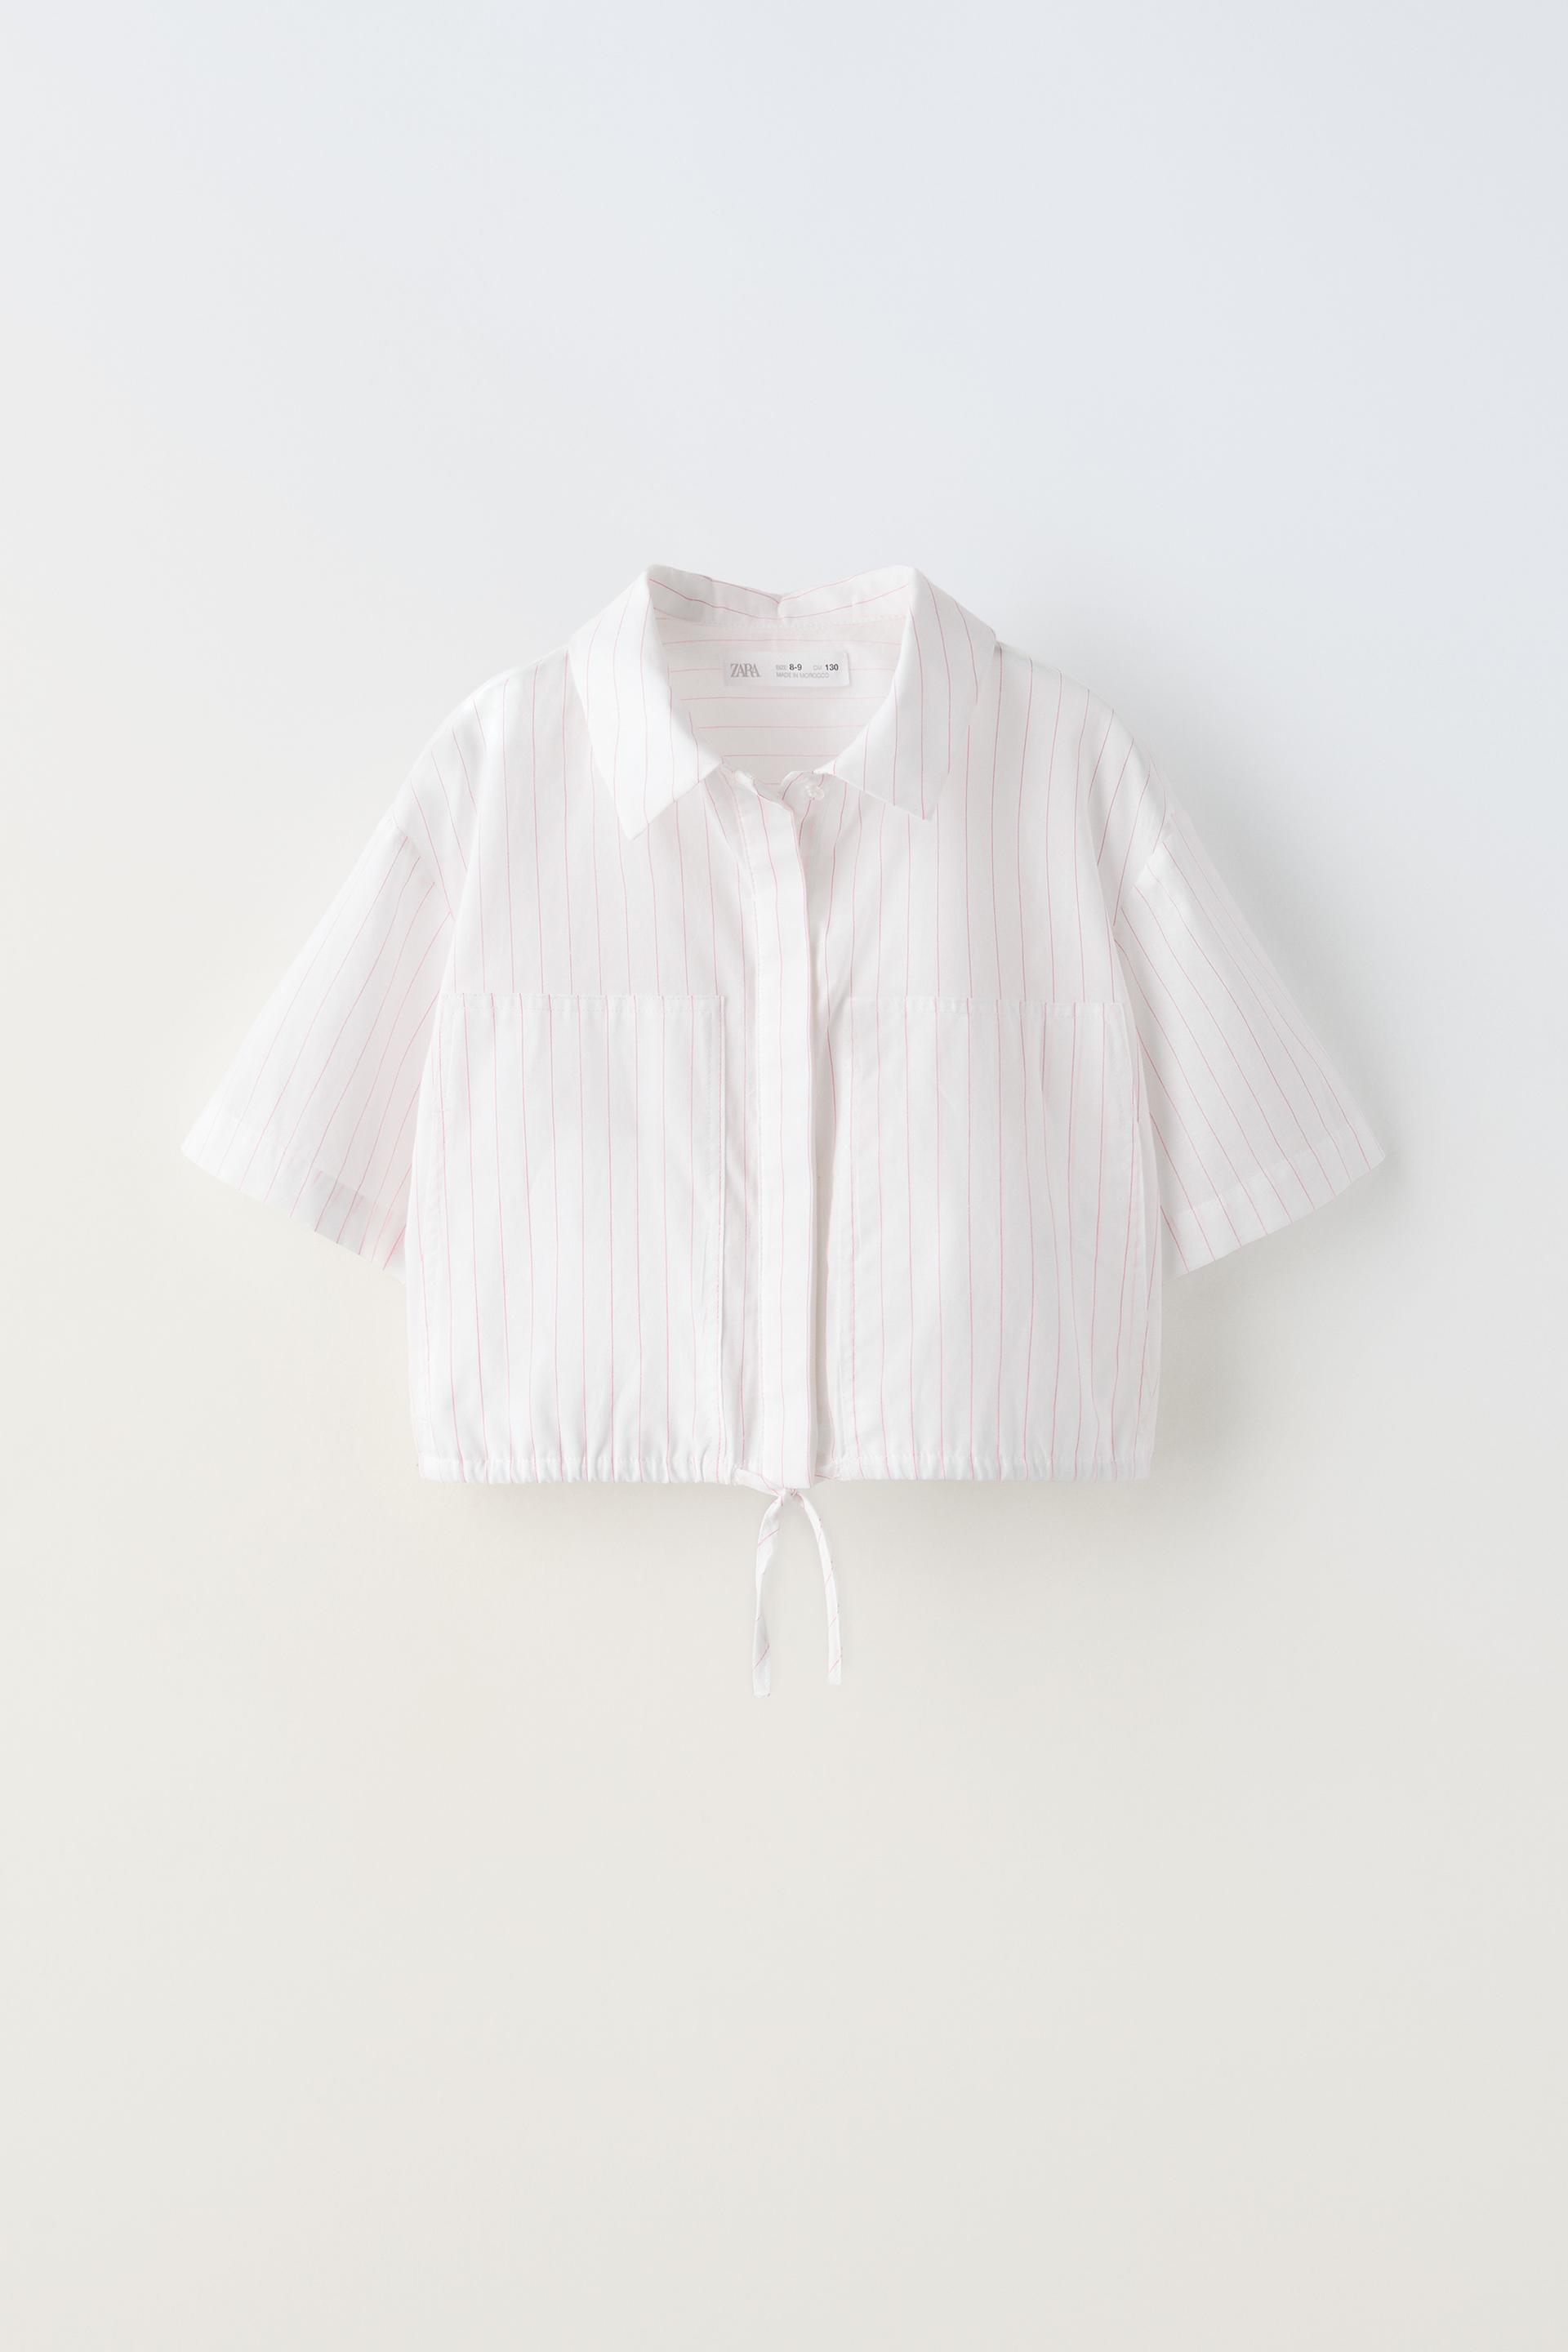 Рубашка Zara Striped Shirt, розовый-белый рубашка zara striped shirt розовый белый